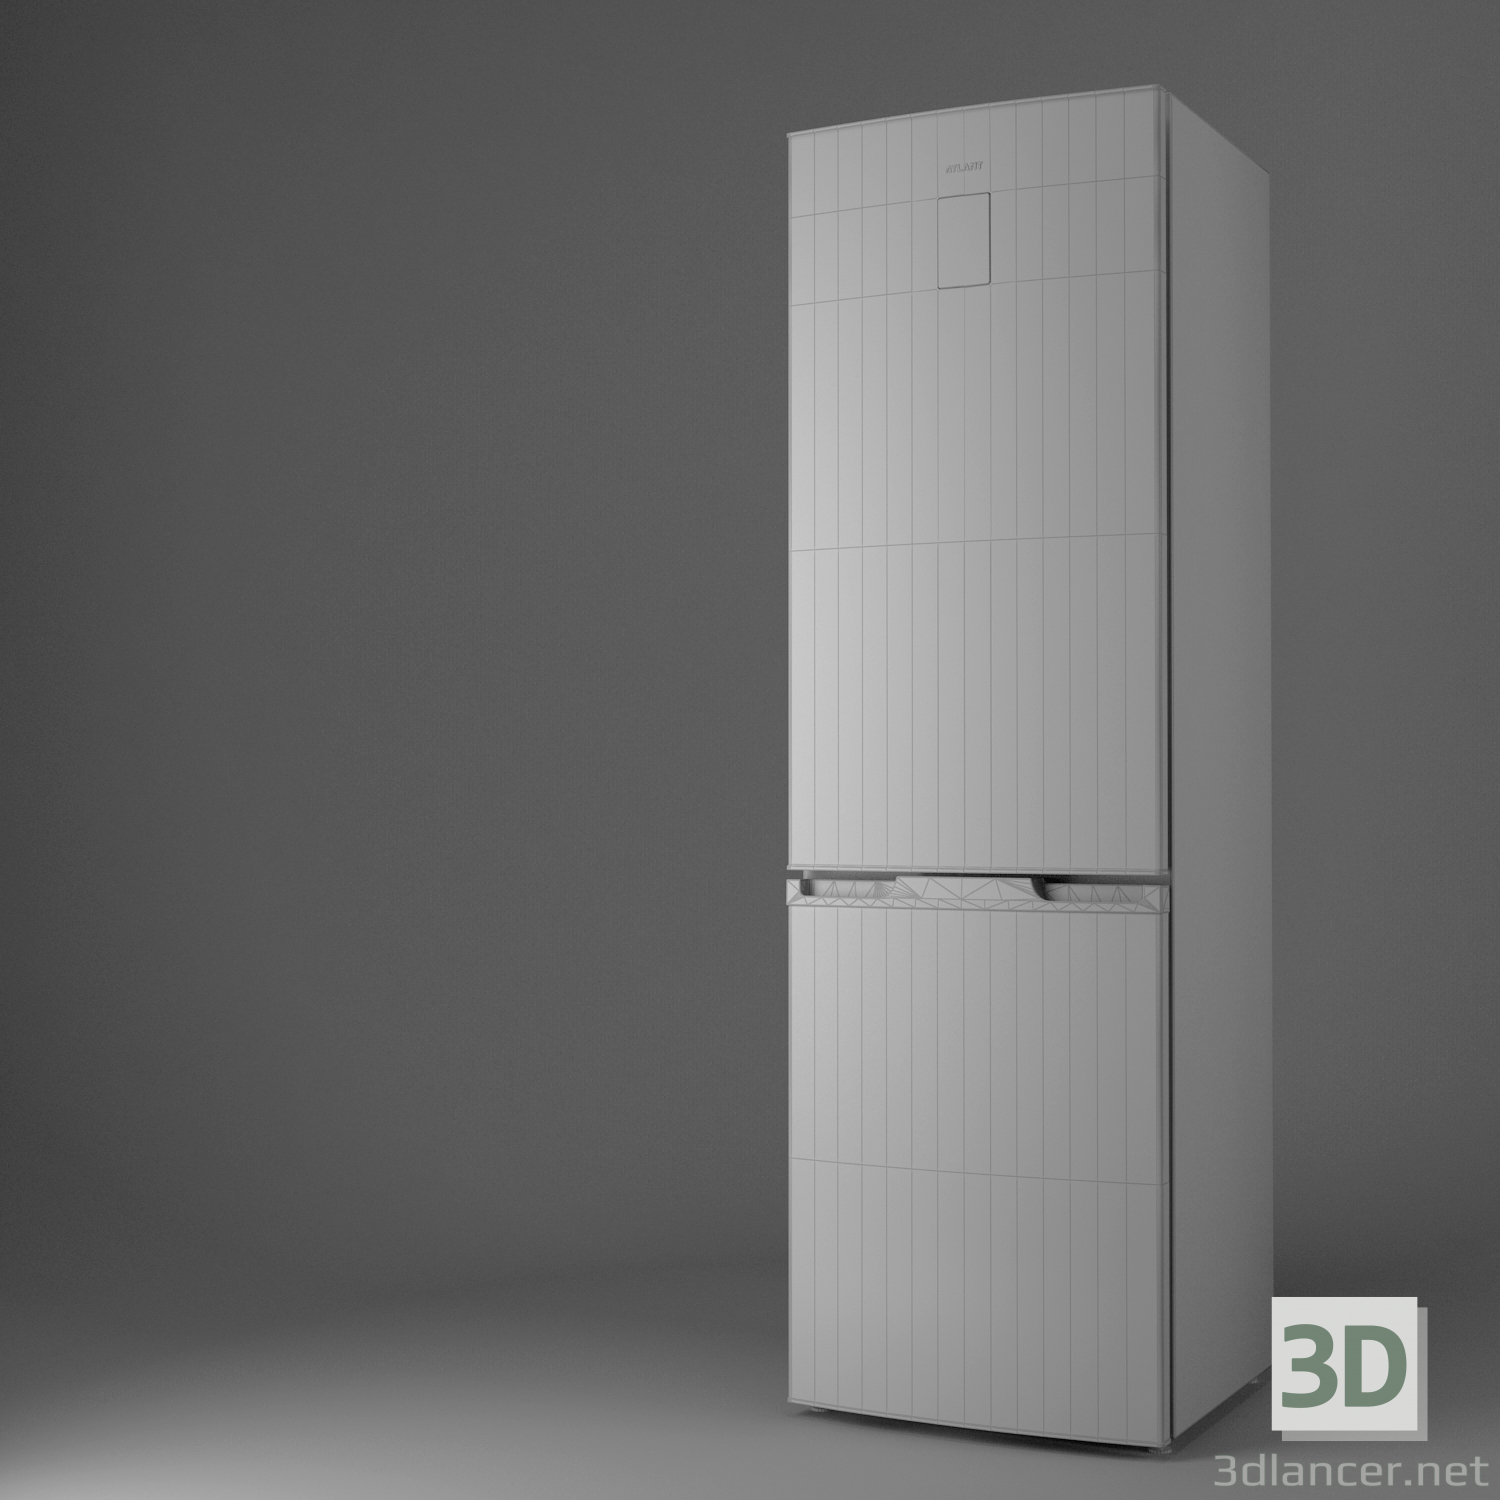 3d model Refrigerador ATLANT XM 4424-ND. Novedad de 2018! - vista previa